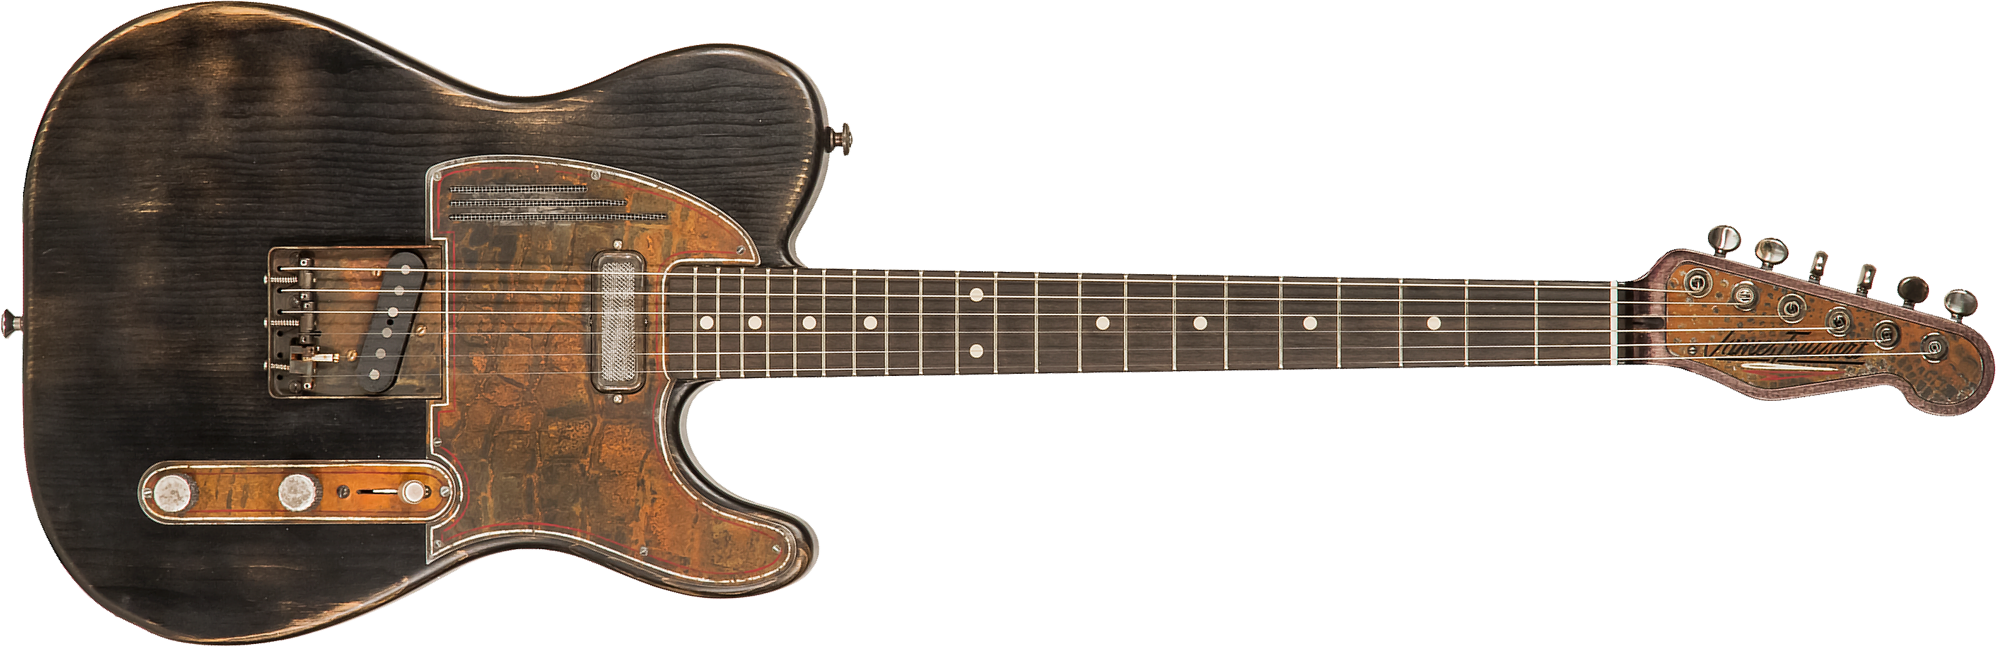 James Trussart Steelguardcaster Glaser B Bender Sh Ht Eb #21062 - Rust O Matic Pinstriped Black Nitro - Televorm elektrische gitaar - Main picture